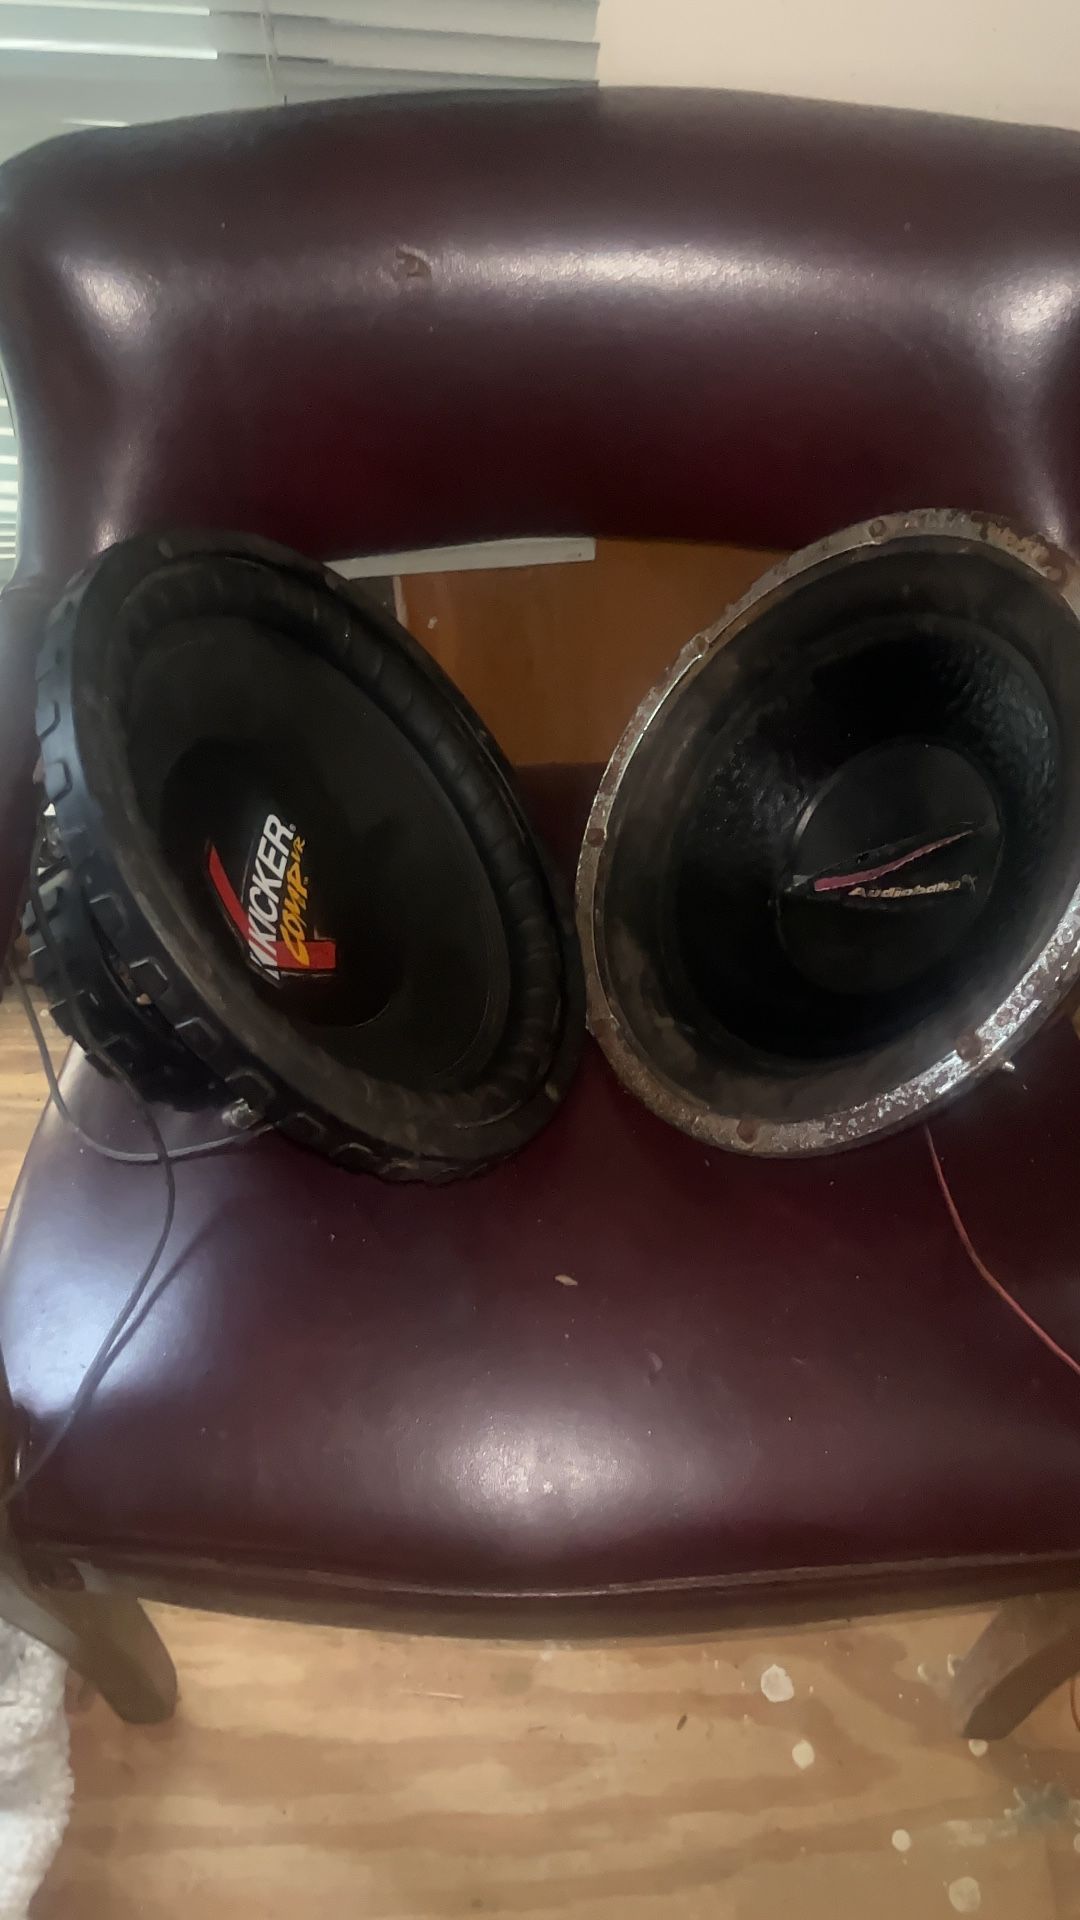 10in Kicker Comp VR & Audiobahn Subwoofer Speakers